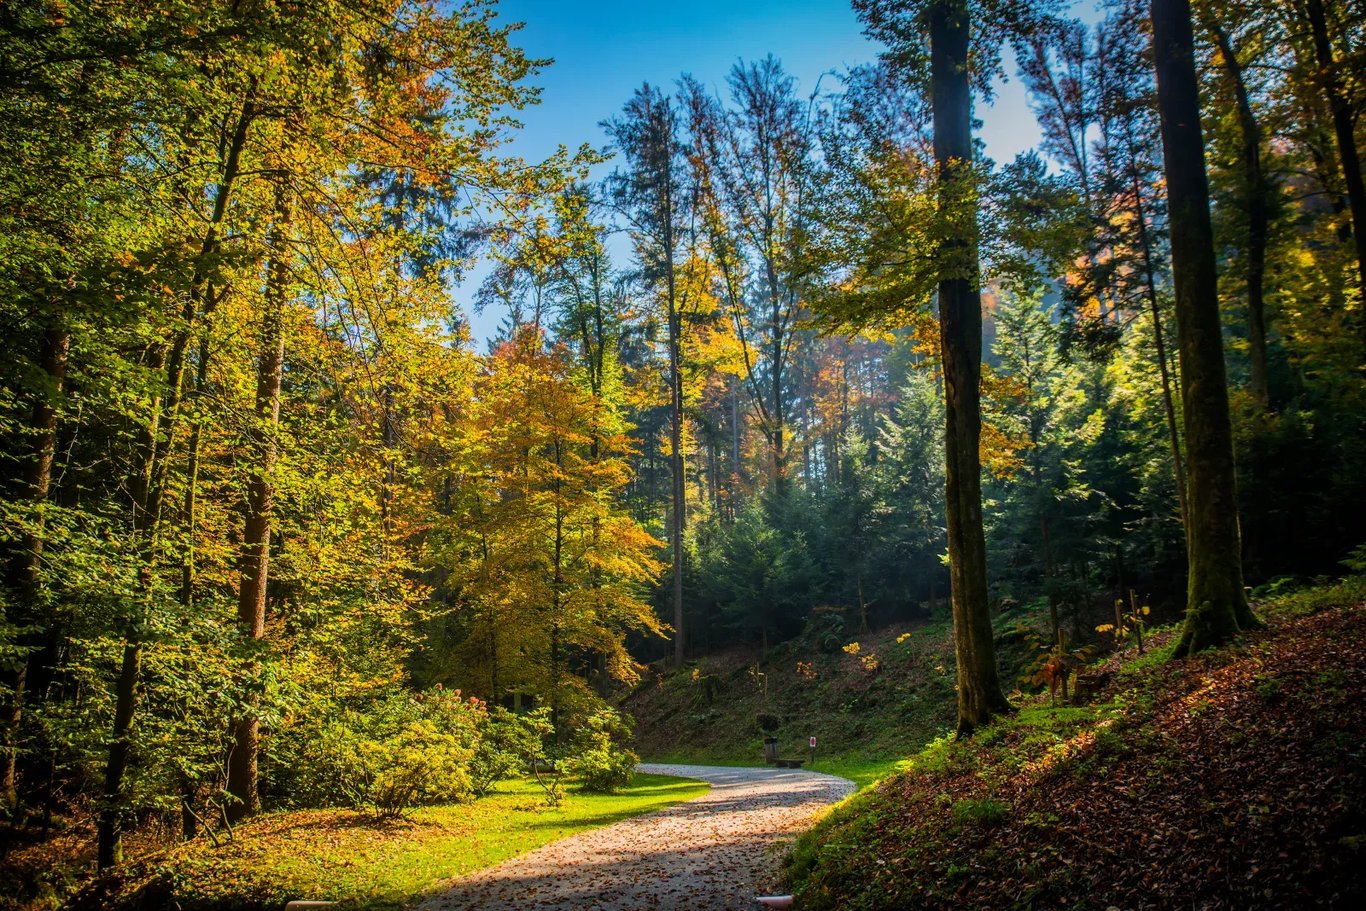 Volcji Potok Arboretum - The Most Beautiful Garden in Slovenia